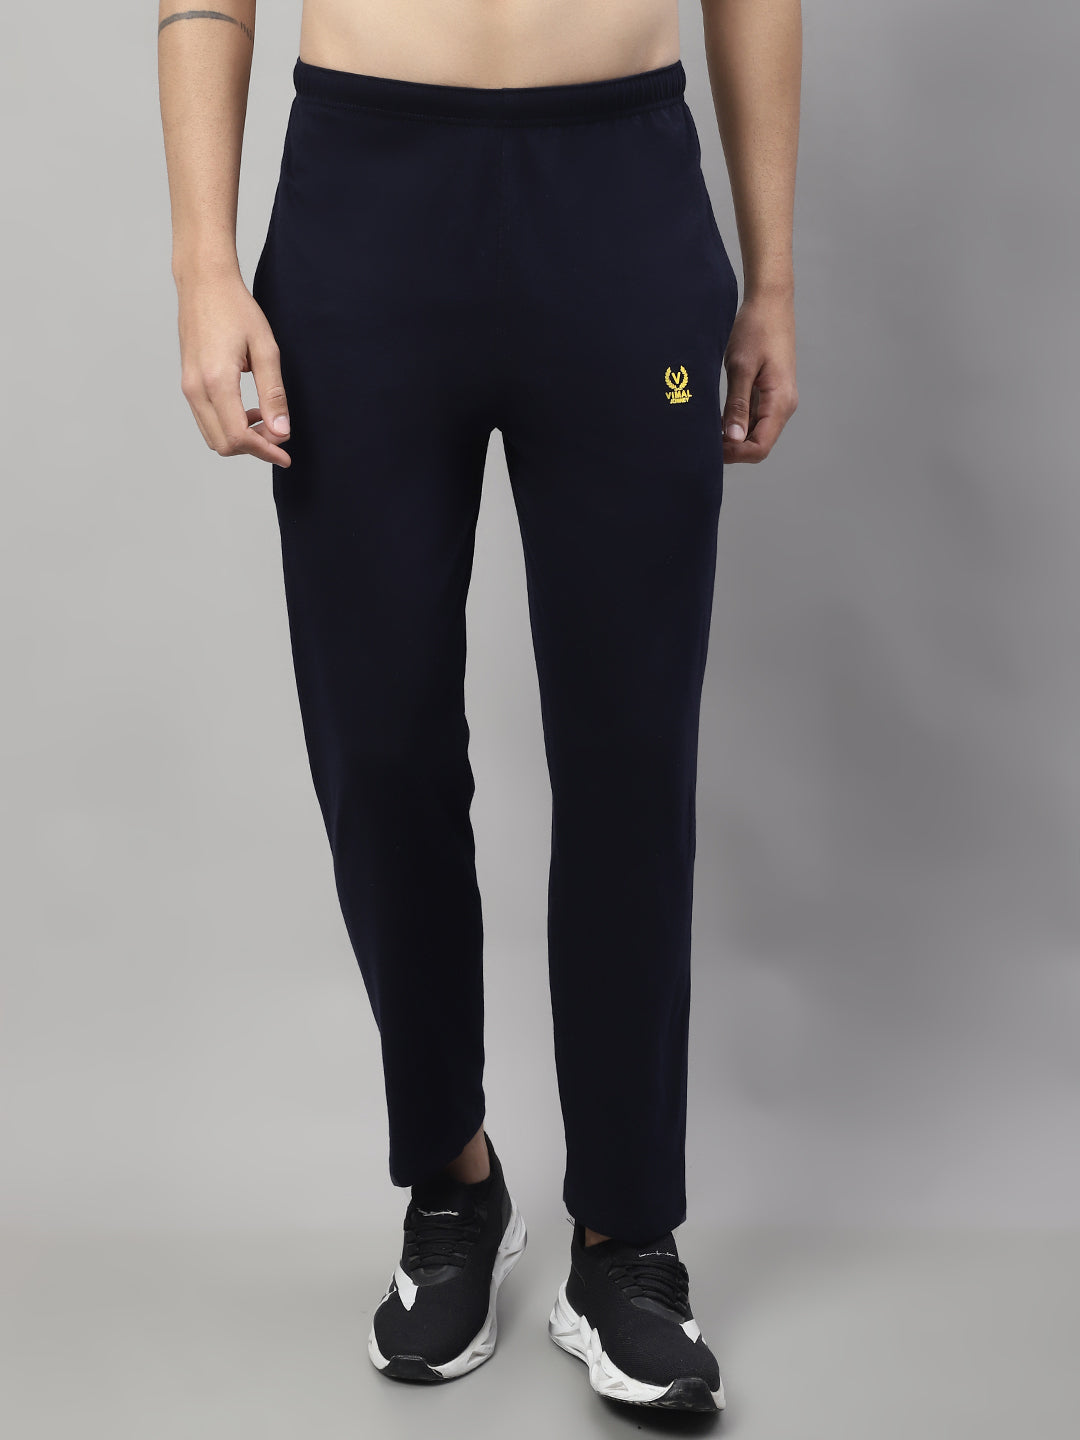 Burberry Men's Linen-cotton Track Pants in Black, Brand Size 44 (X-Small)  8041446 - Apparel - Jomashop